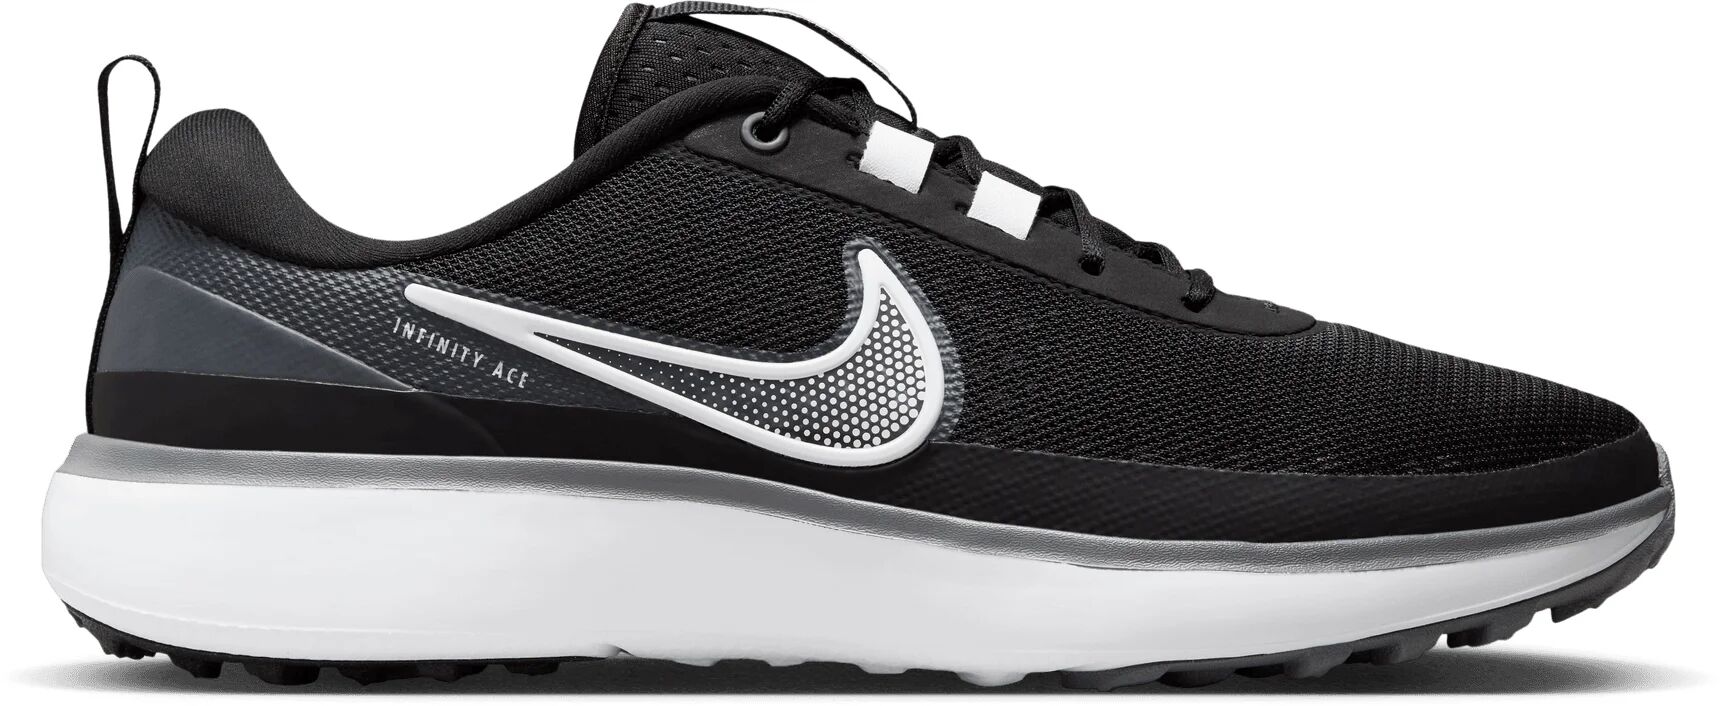 Nike Infinity Ace Next Nature Golf Shoes - Black/Smoke Grey/Iron Grey/White - 9.5 - MEDIUM